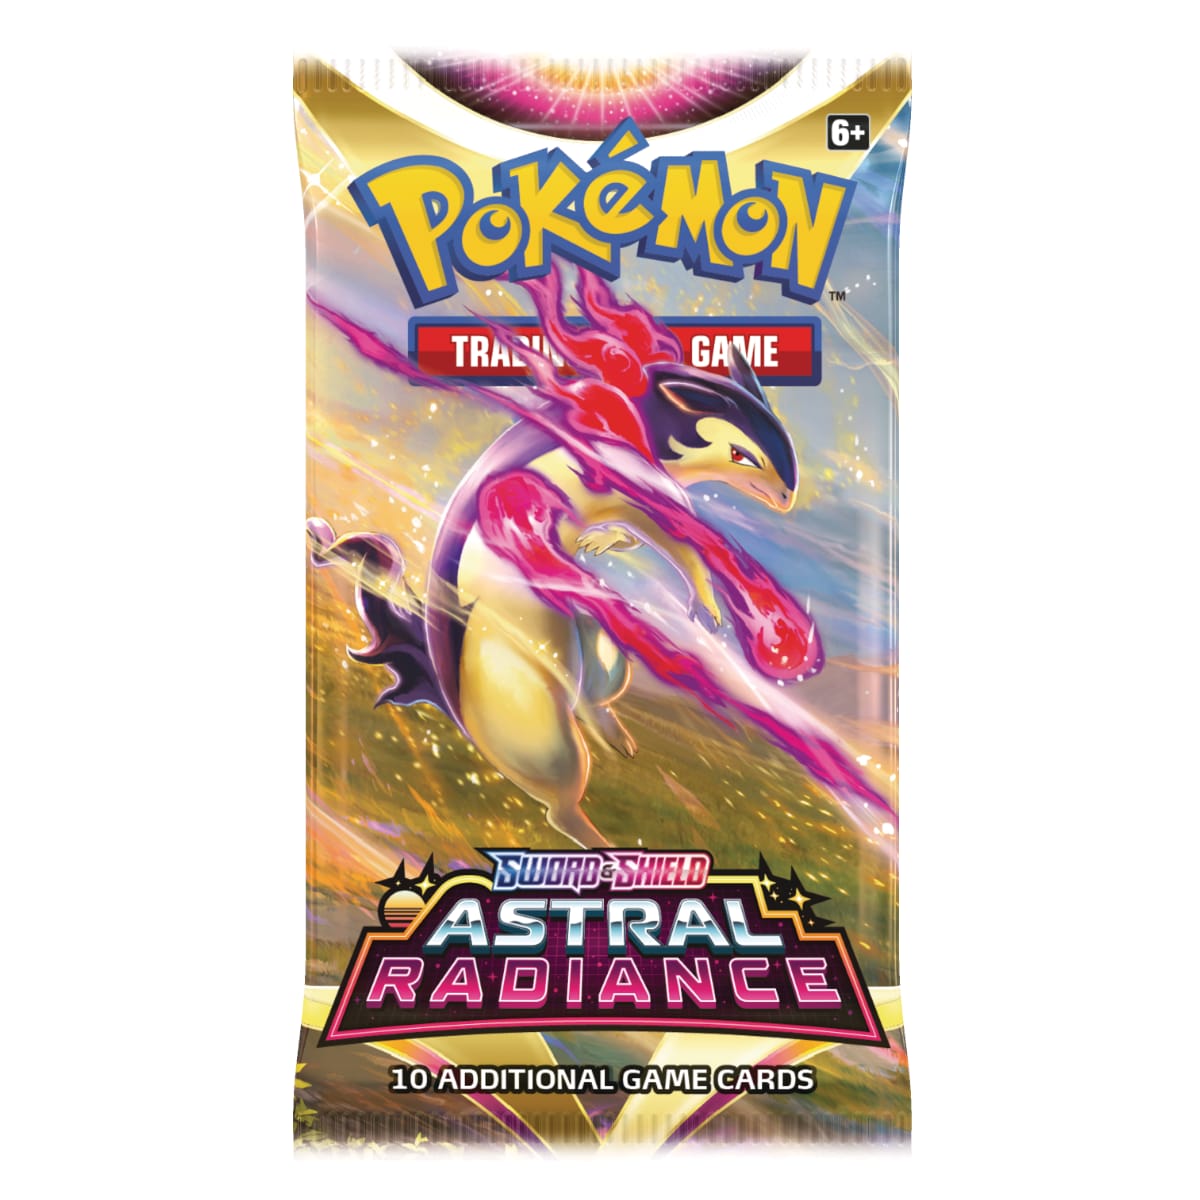 Pokémon - Astral Radiance Booster